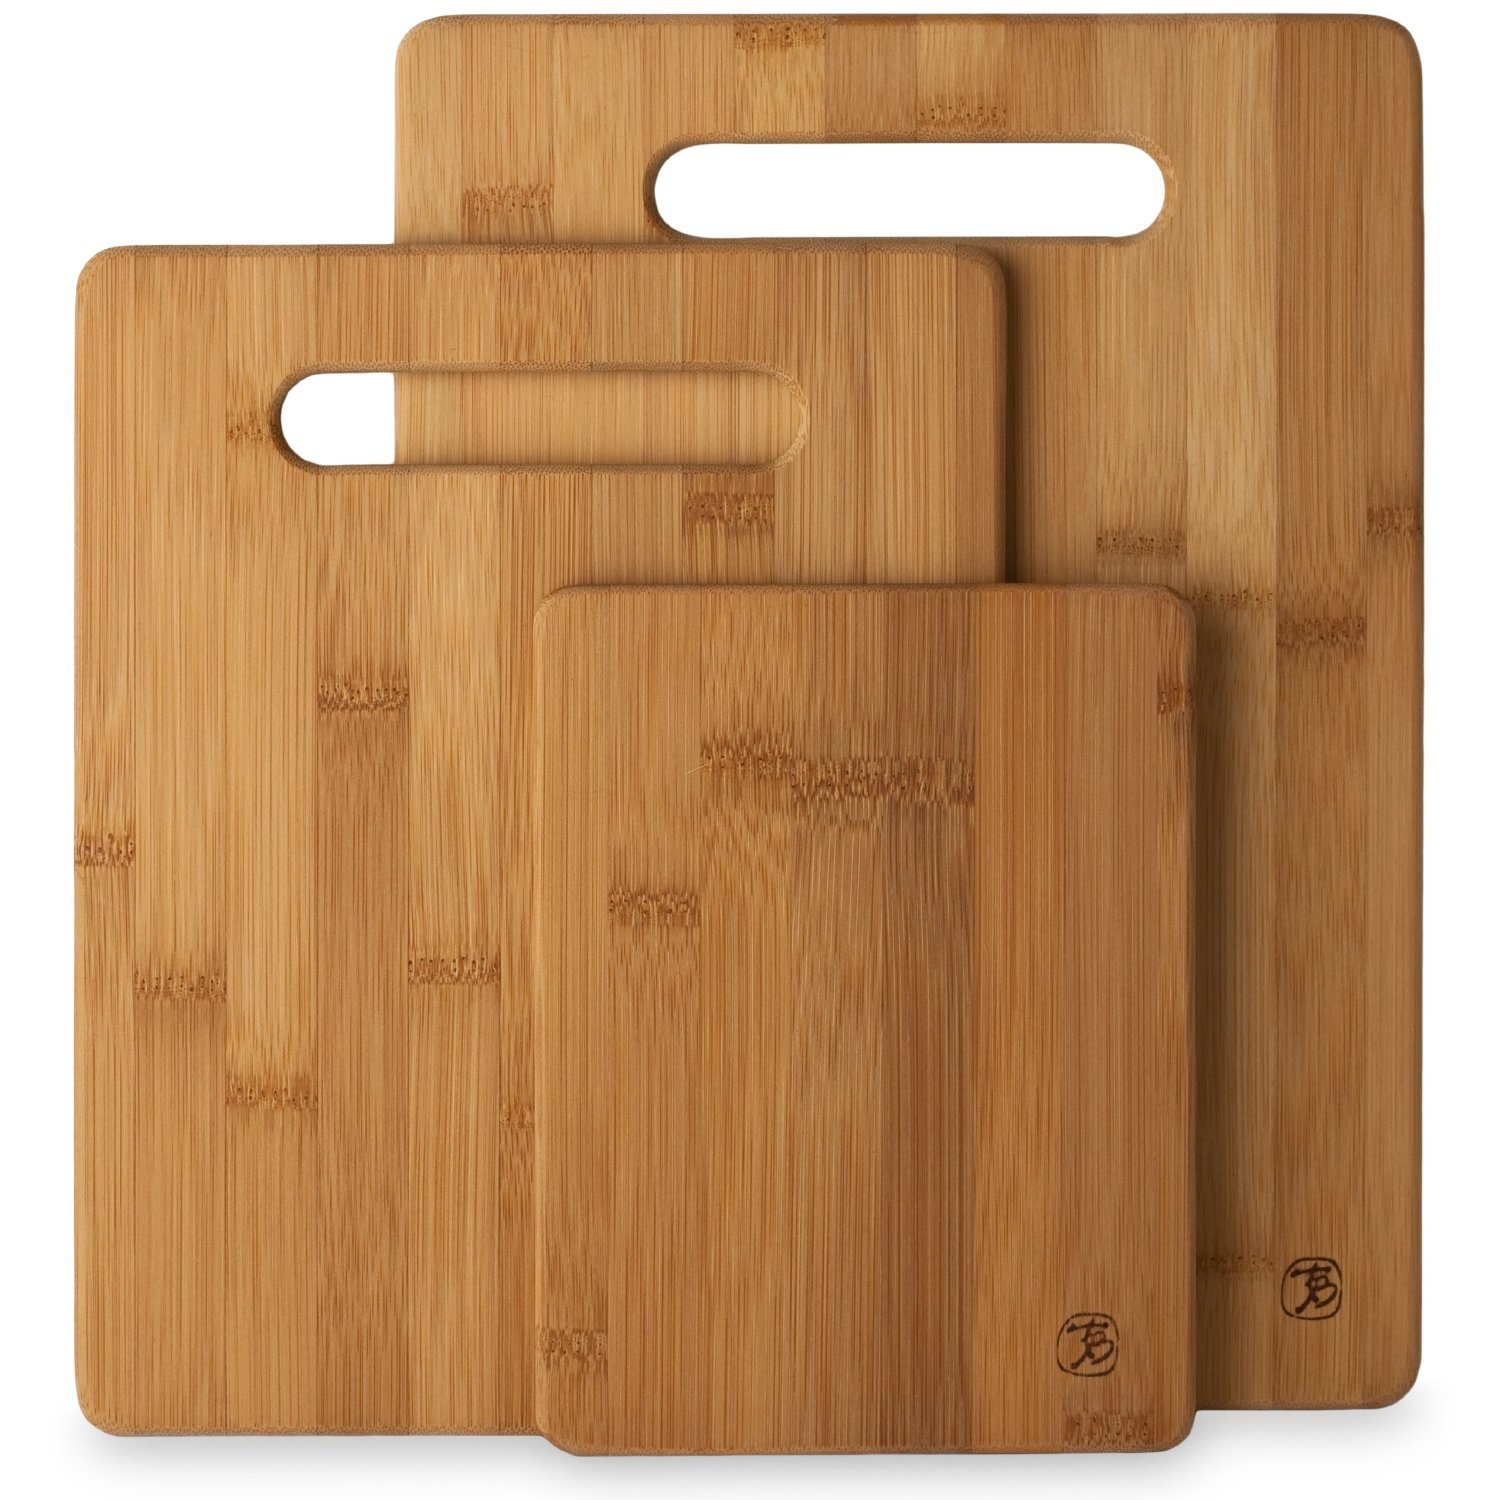 3 Piece Bamboo Cutting Board Set – Just $12.99!